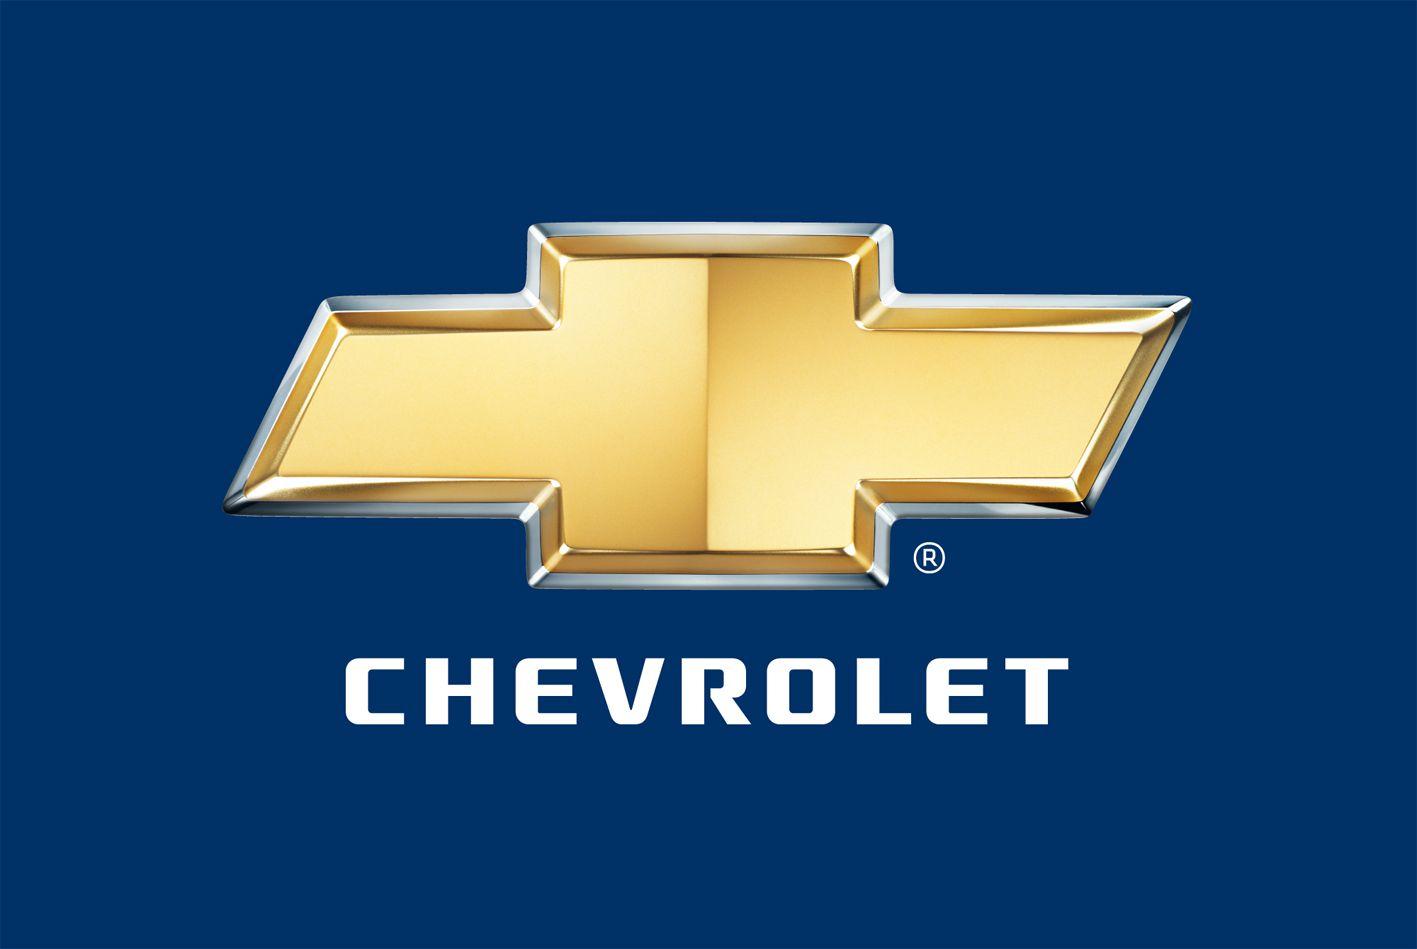 Chevrolet Car Logo - Chevy Logo, Chevrolet Car Symbol Meaning and History | Car Brand ...